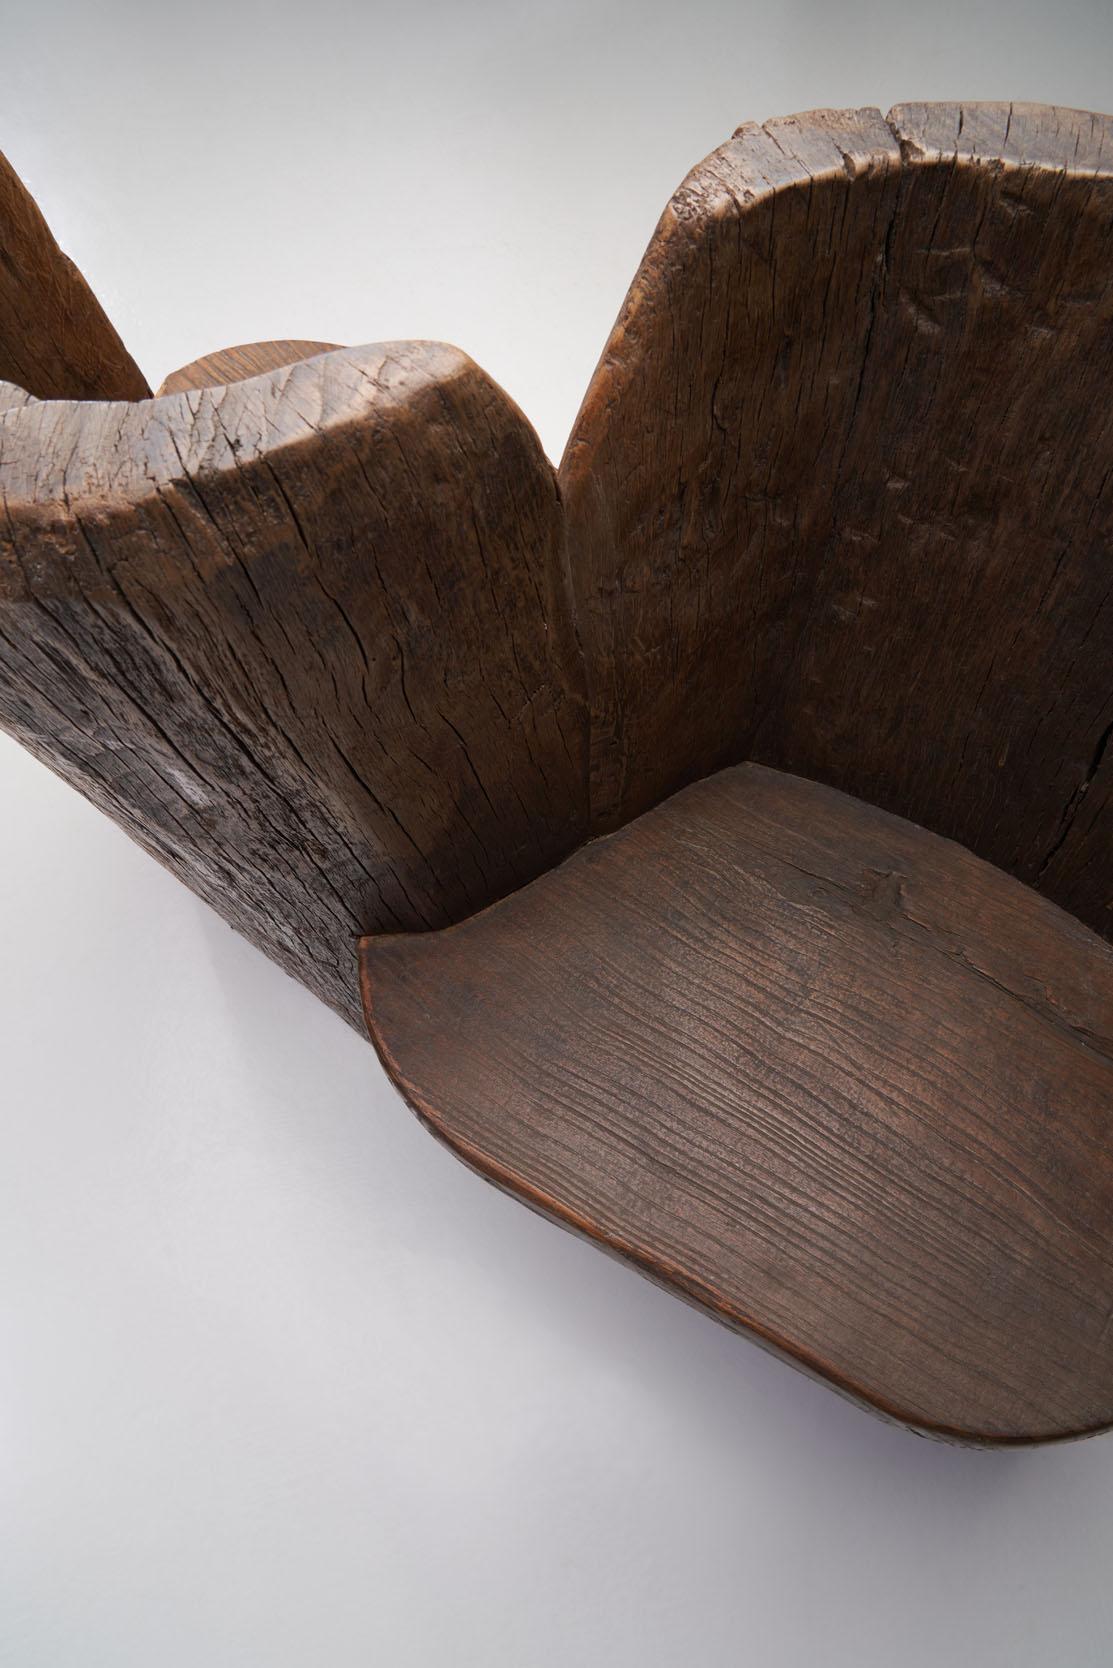 Tibetan Carved Wood “Tête a Tête” Love Seat, Tibet 19th Century For Sale 3